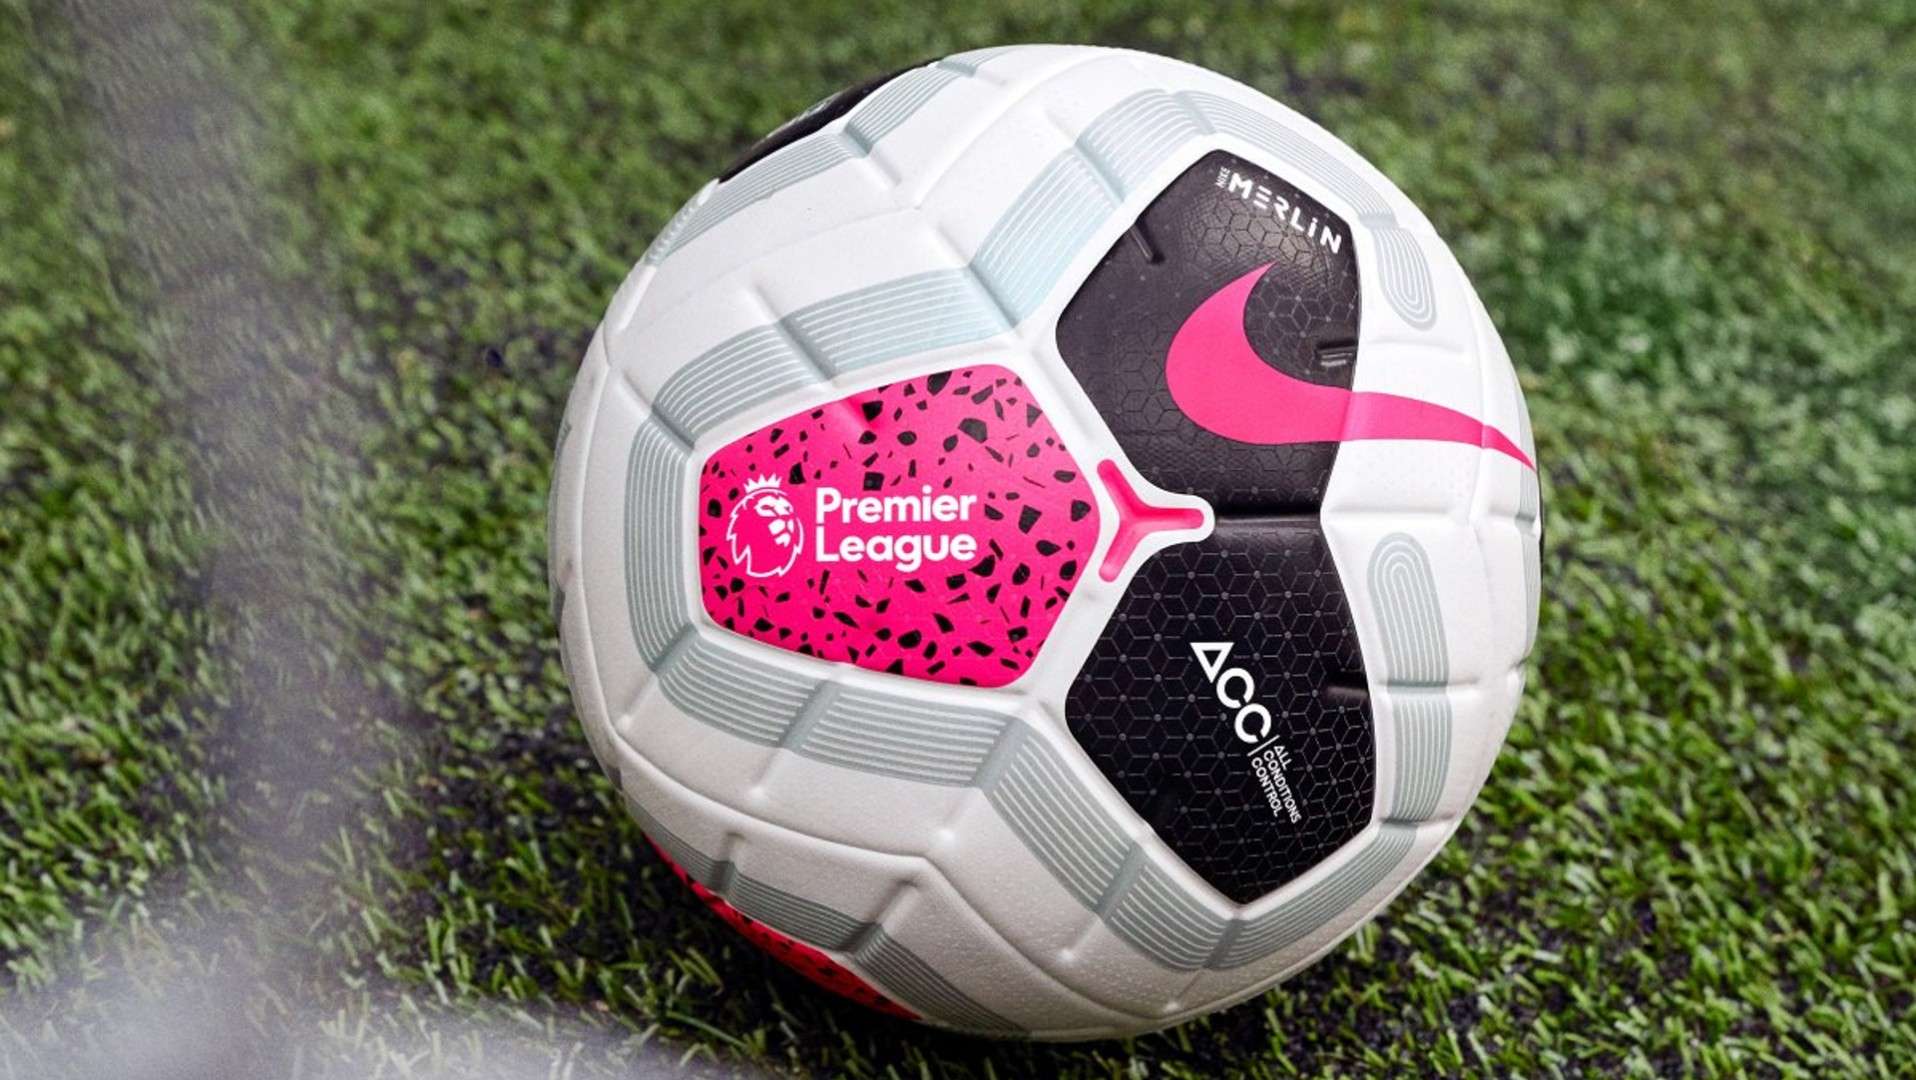 Premier League ball 2019-20